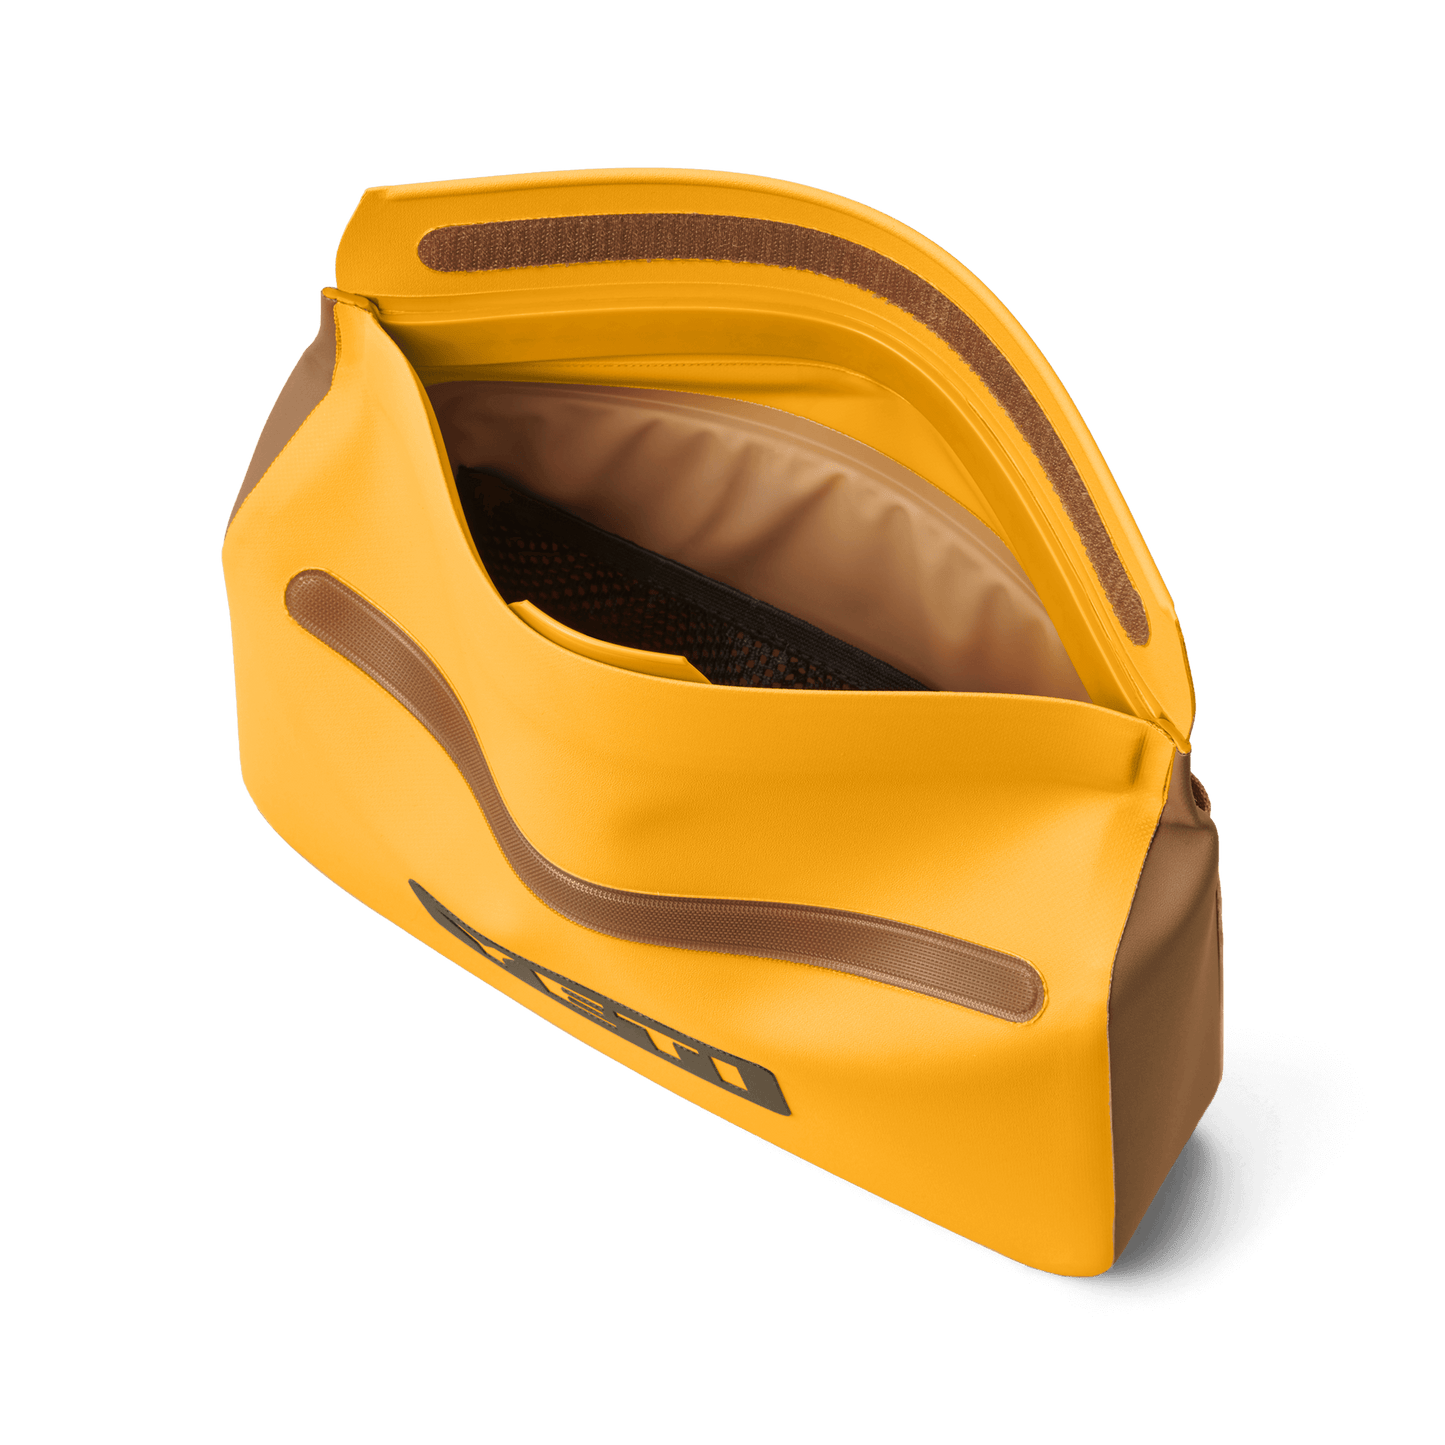 YETI Sidekick Dry® Gear Case Alpine Yellow